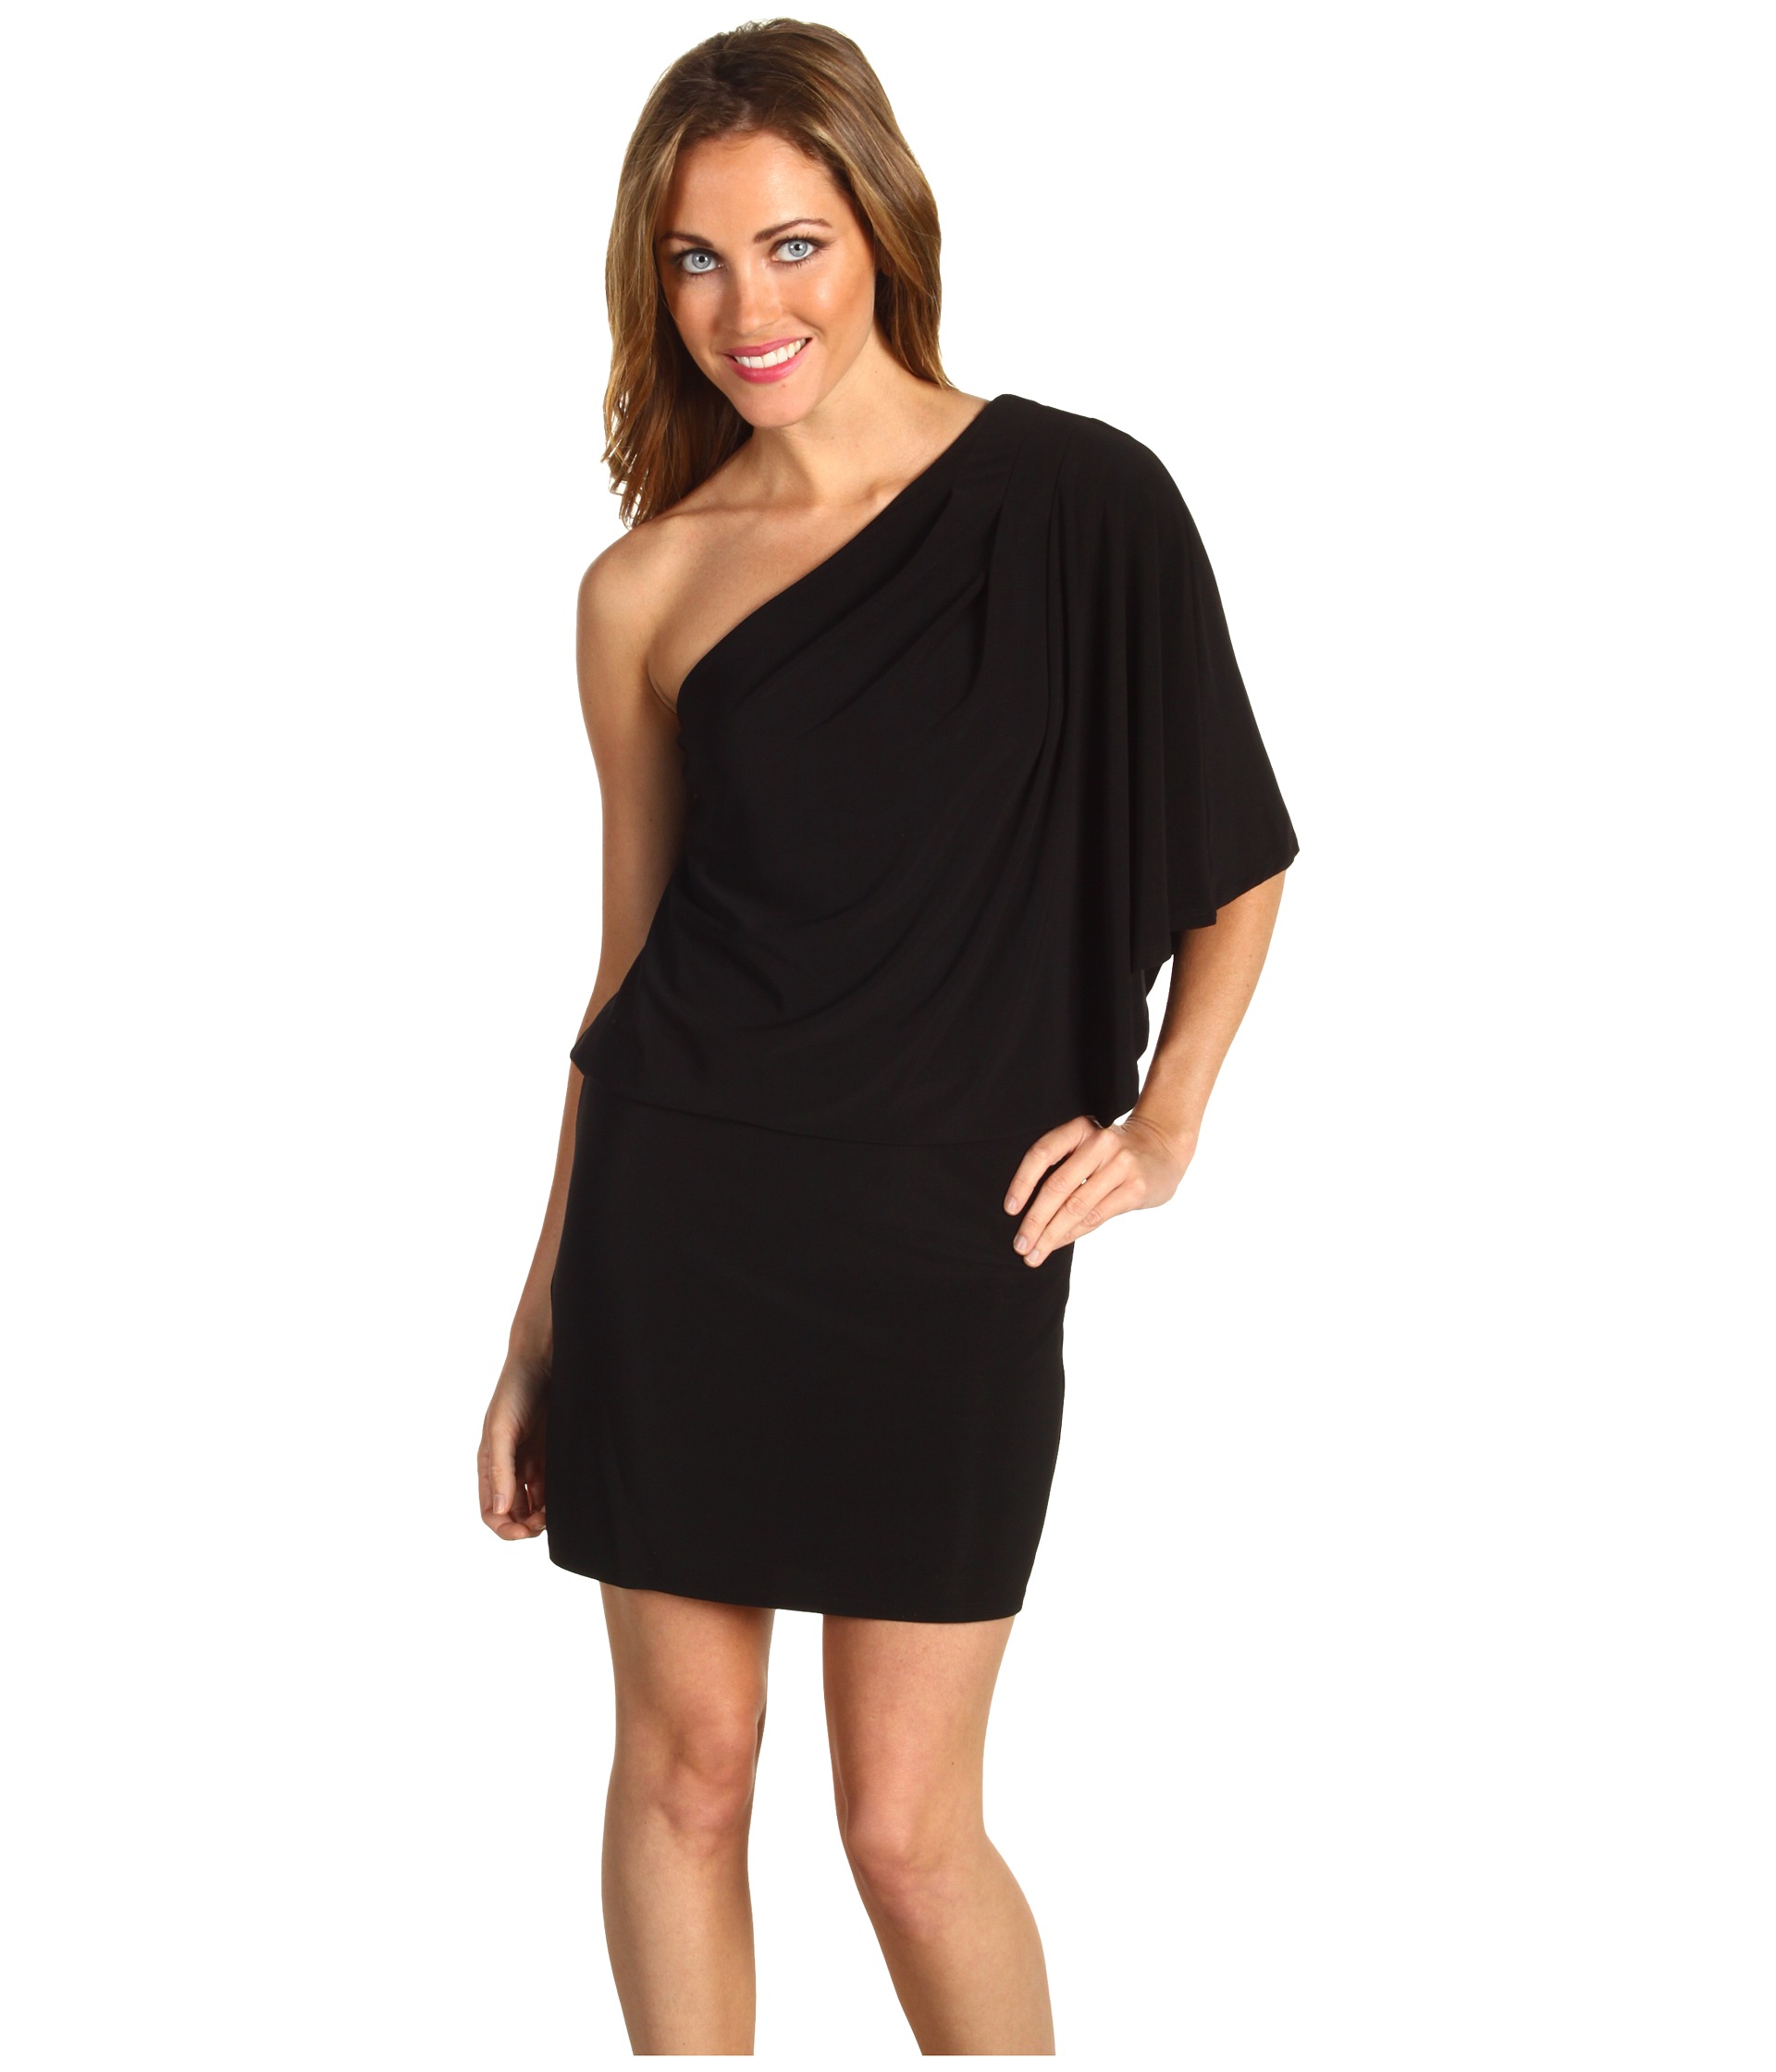 Jessica Simpson One Shoulder Mini Dress $59.99 ( 39% off MSRP $98.00)